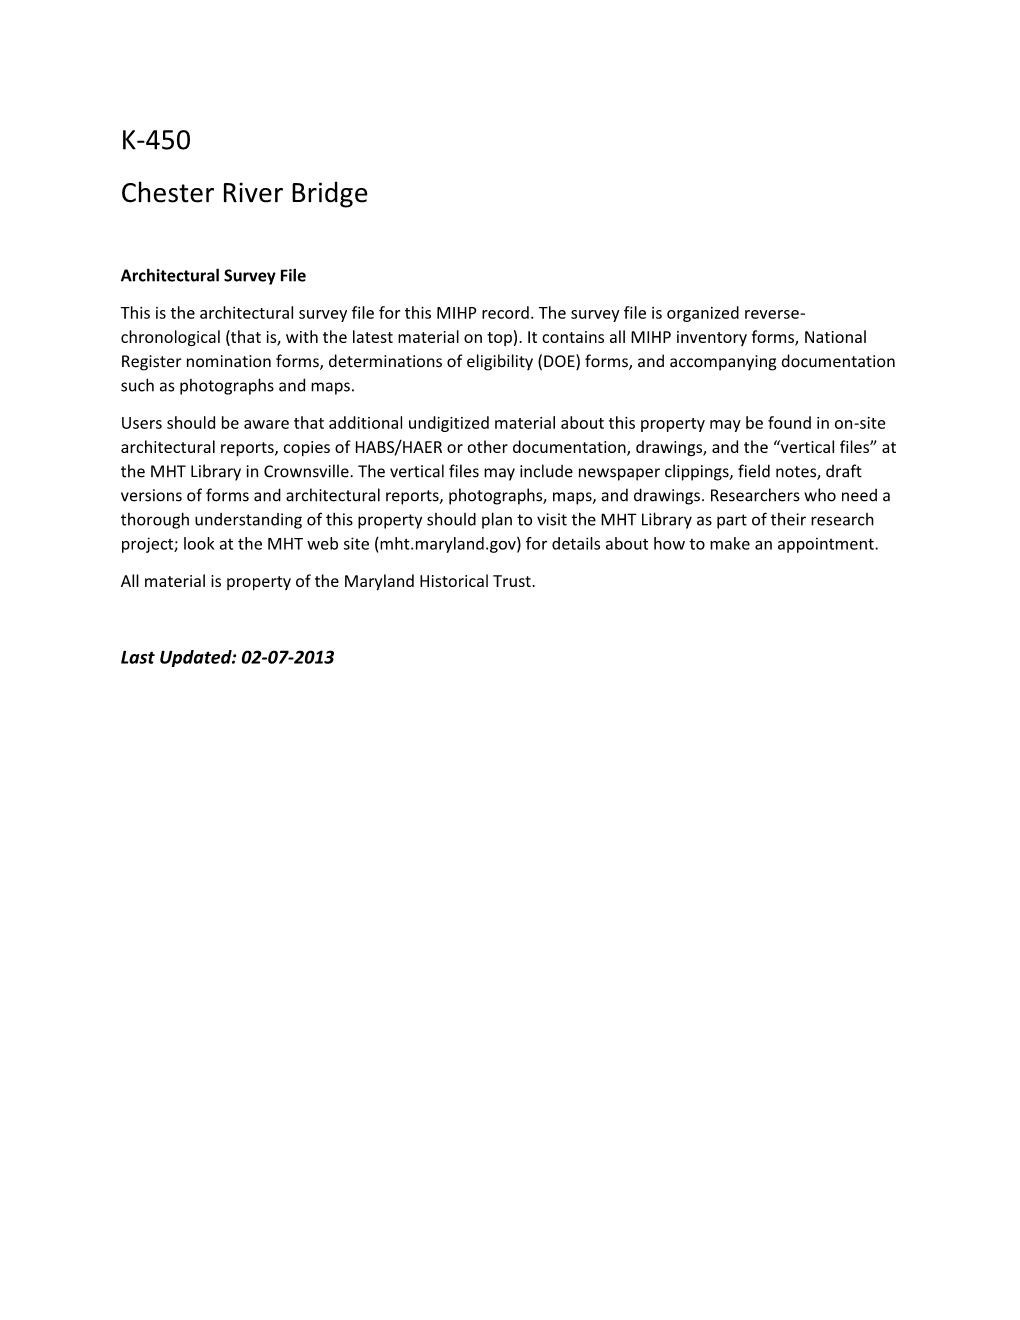 K-450 Chester River Bridge